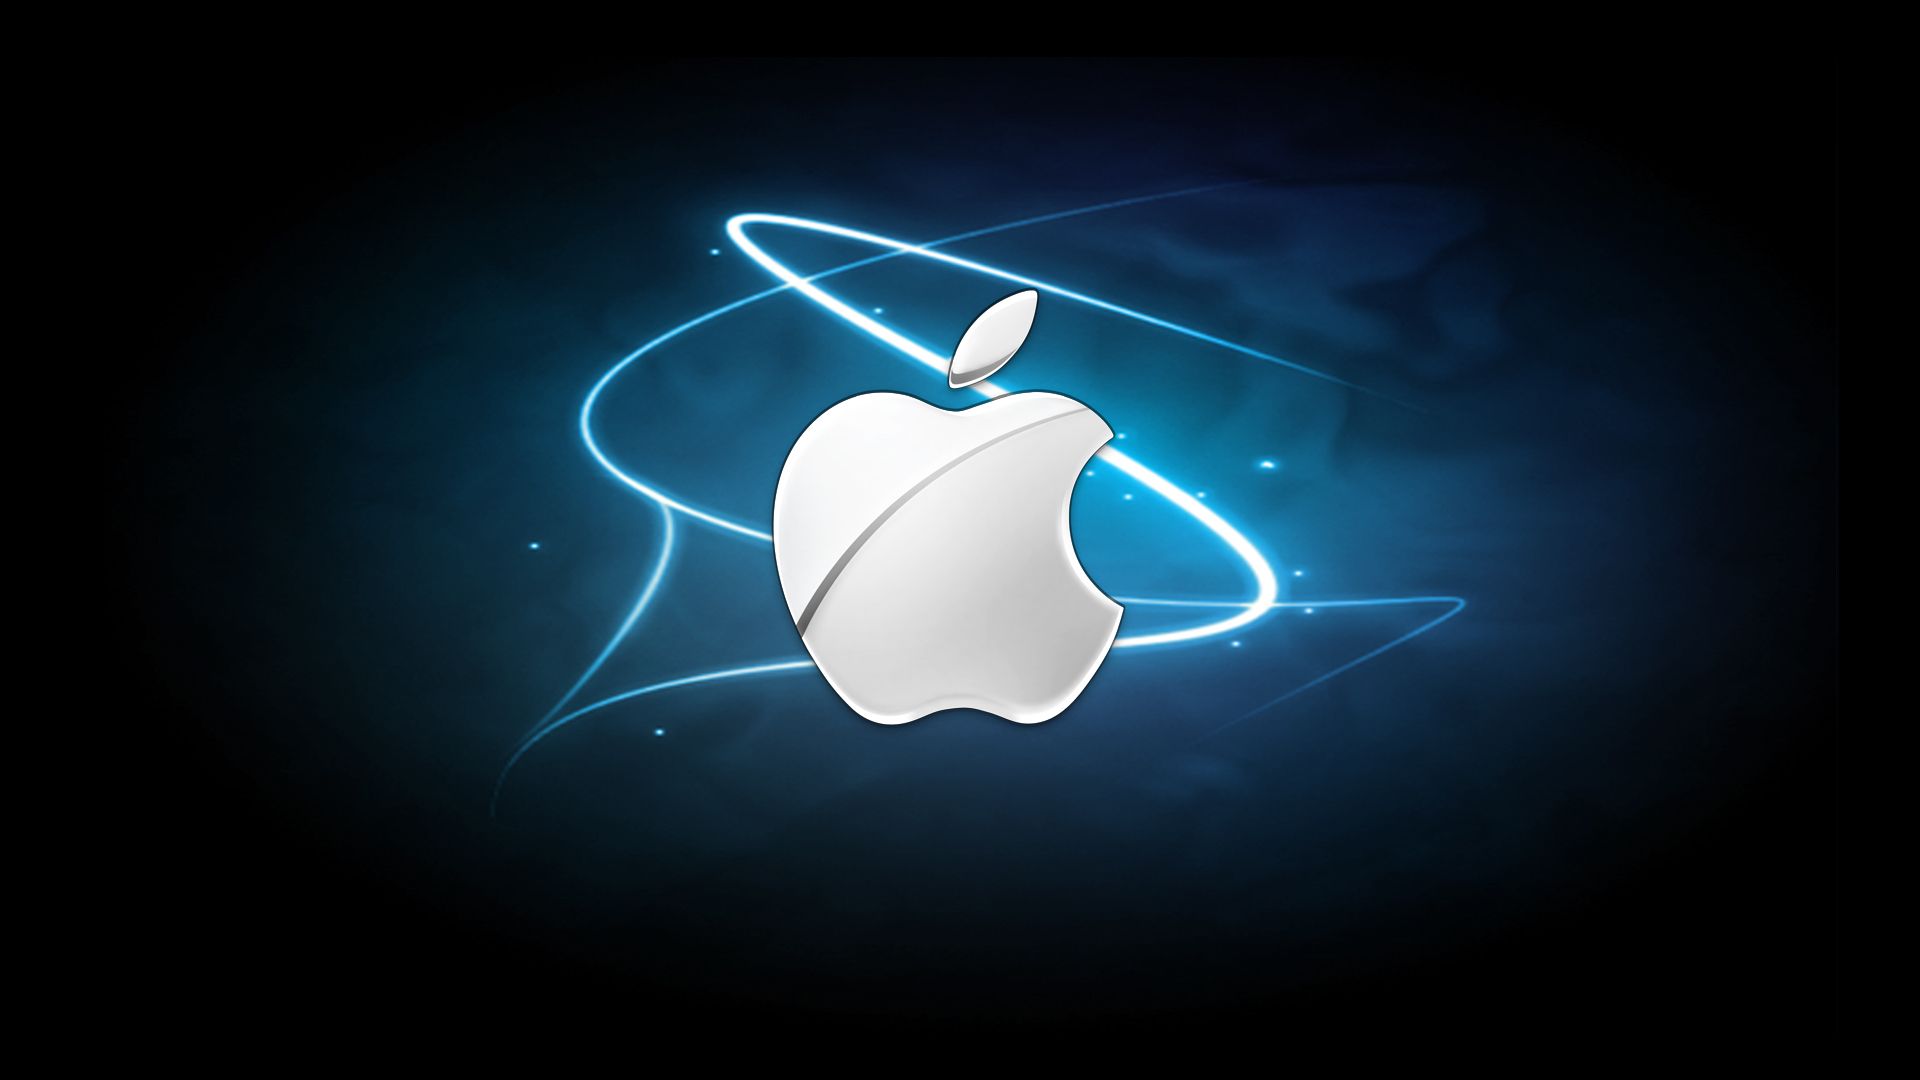 Apple logo wallpaper on Pinterest | Apple Logo, Wallpapers and ...